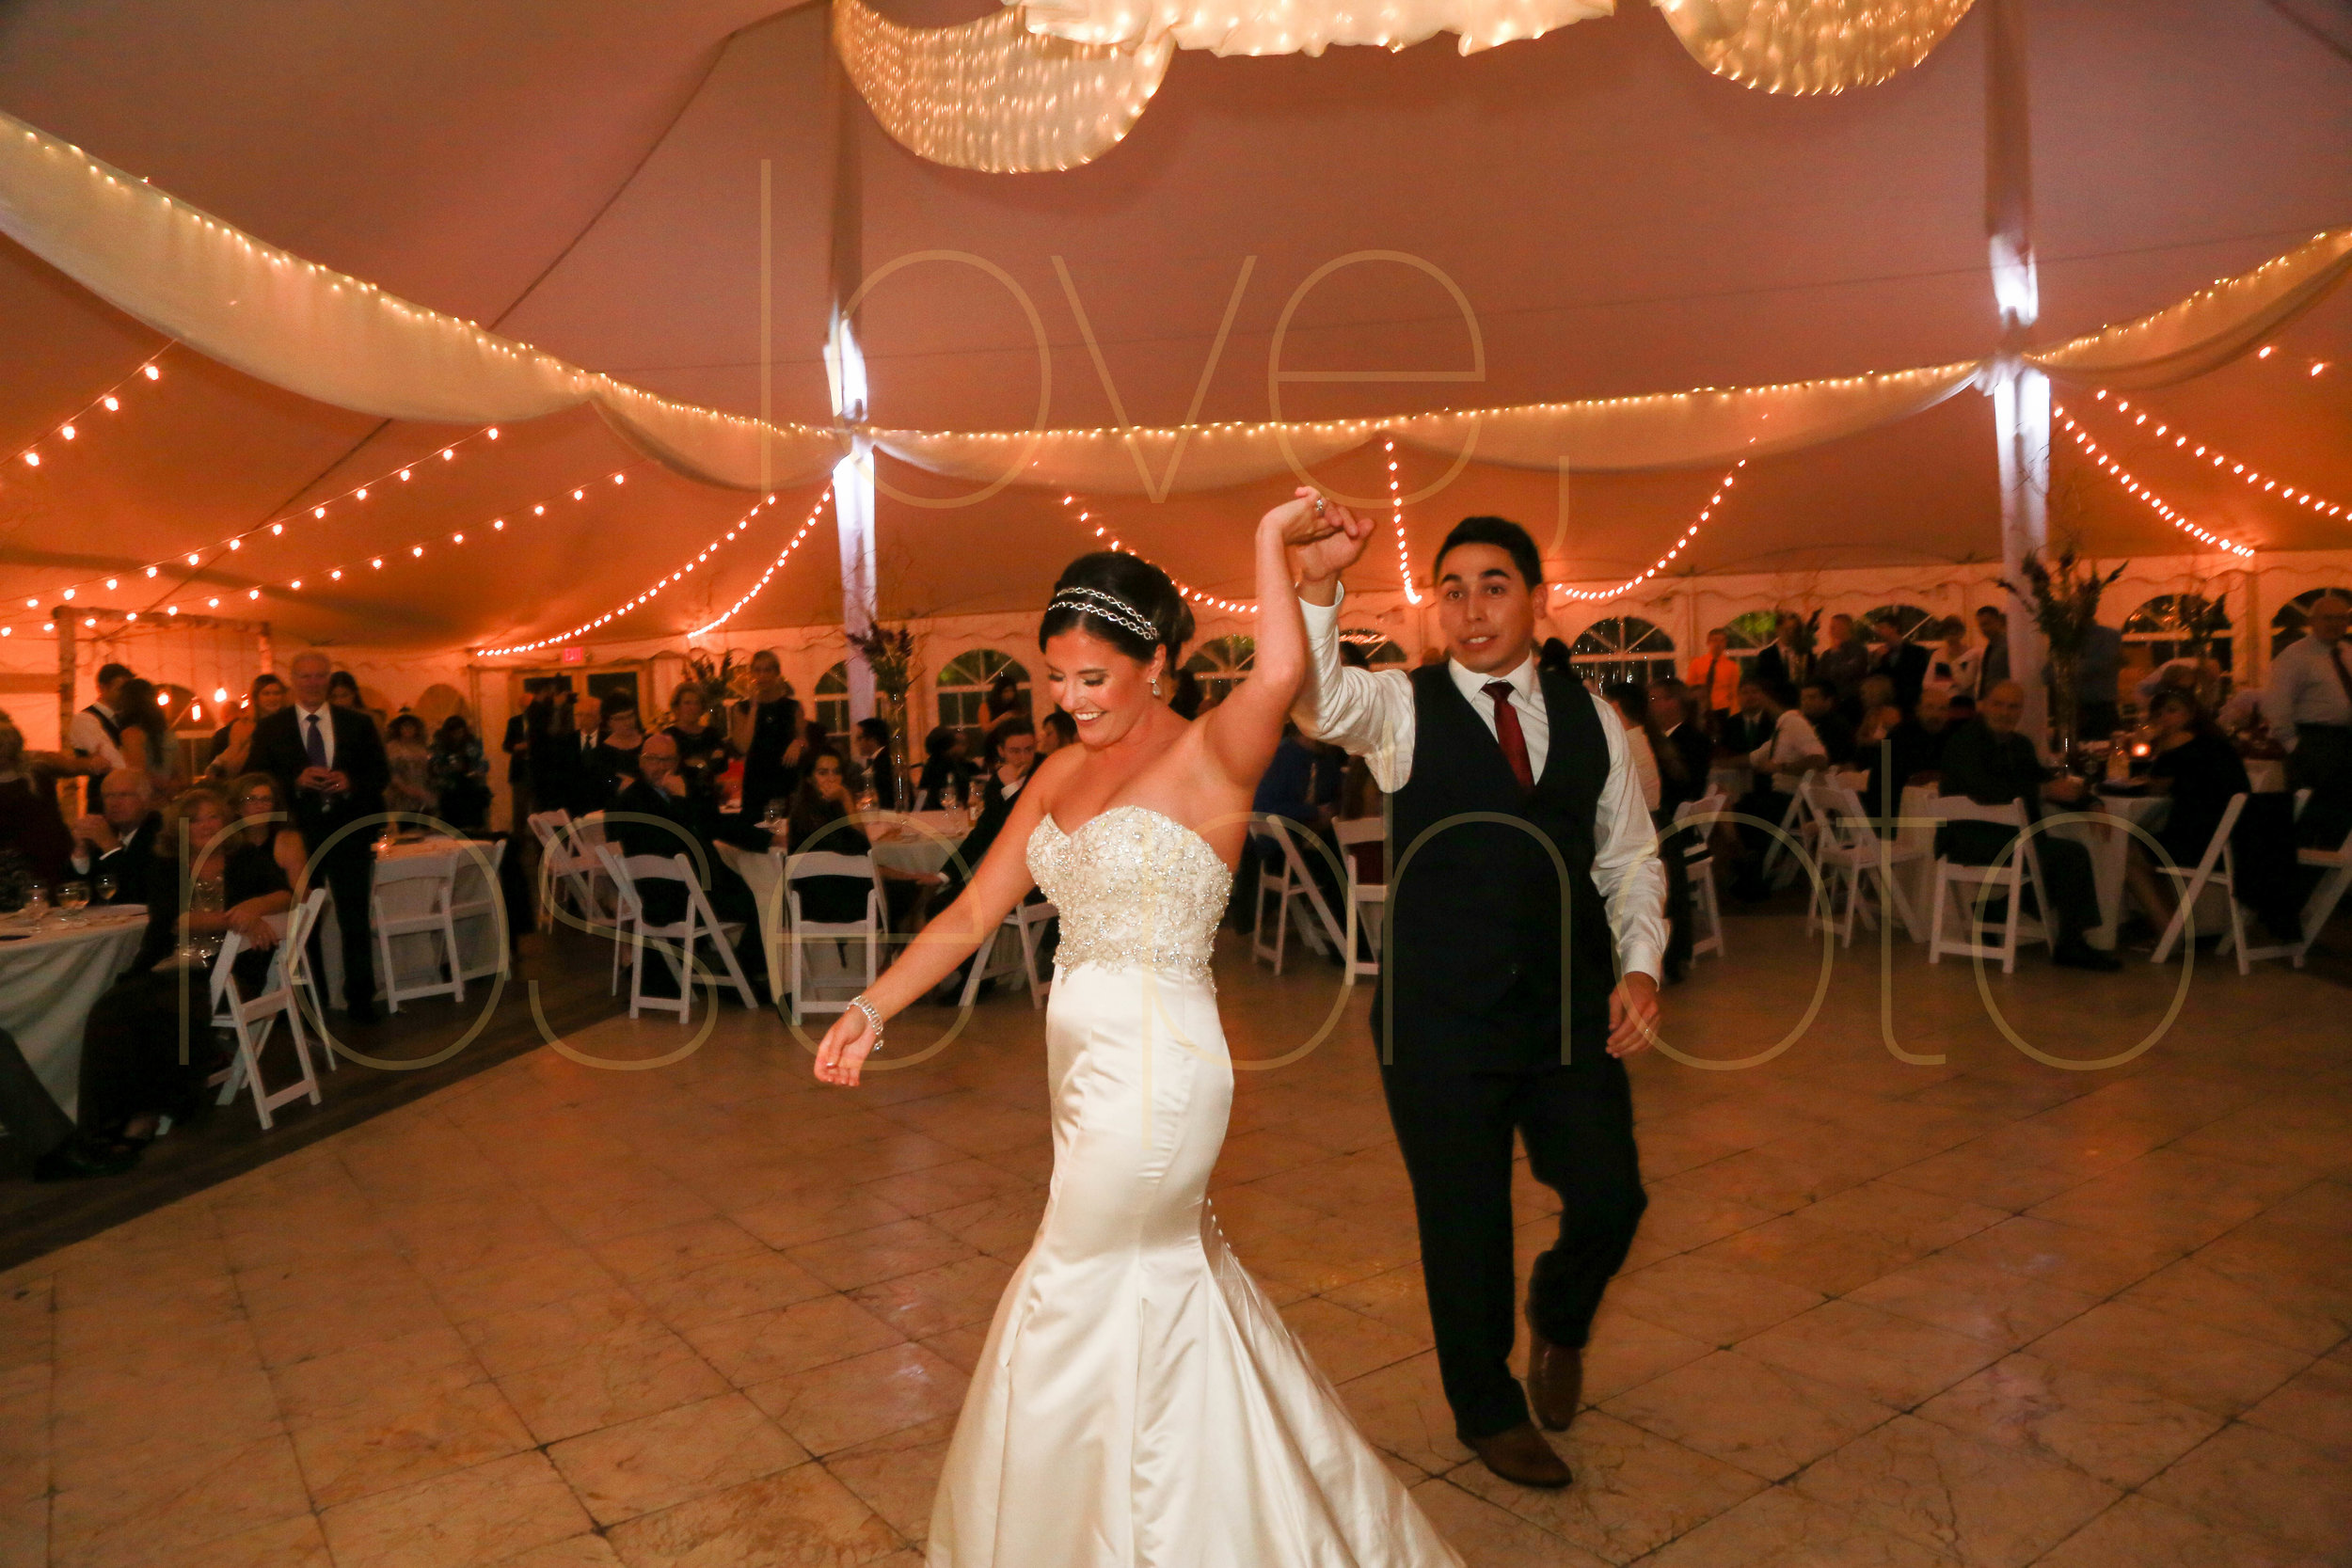 Alison + Mike Chicago Wedding Photographer Blog -22.jpg